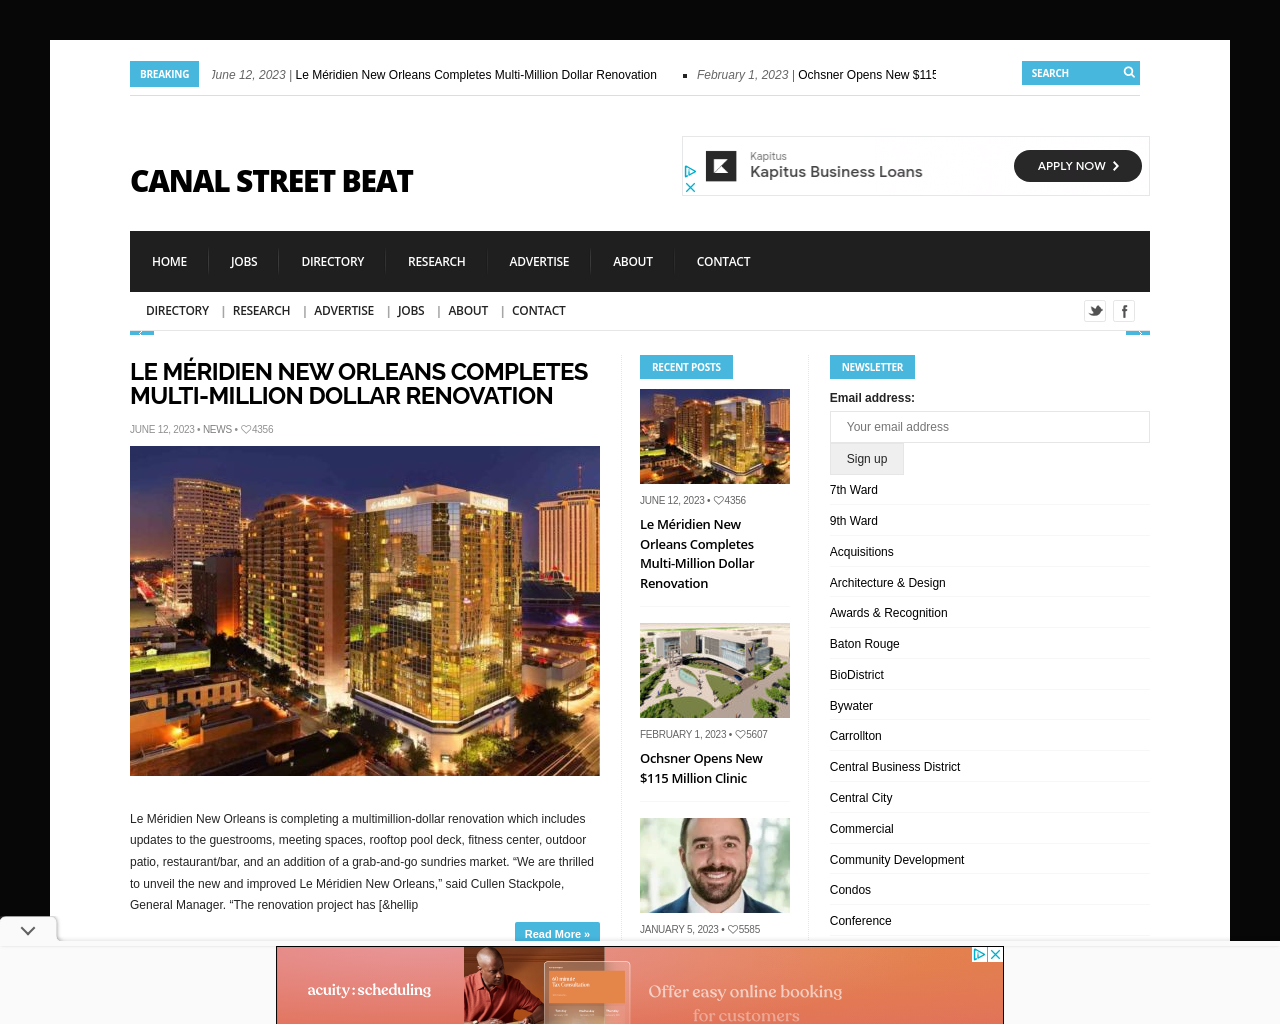 canalstreetbeat.com